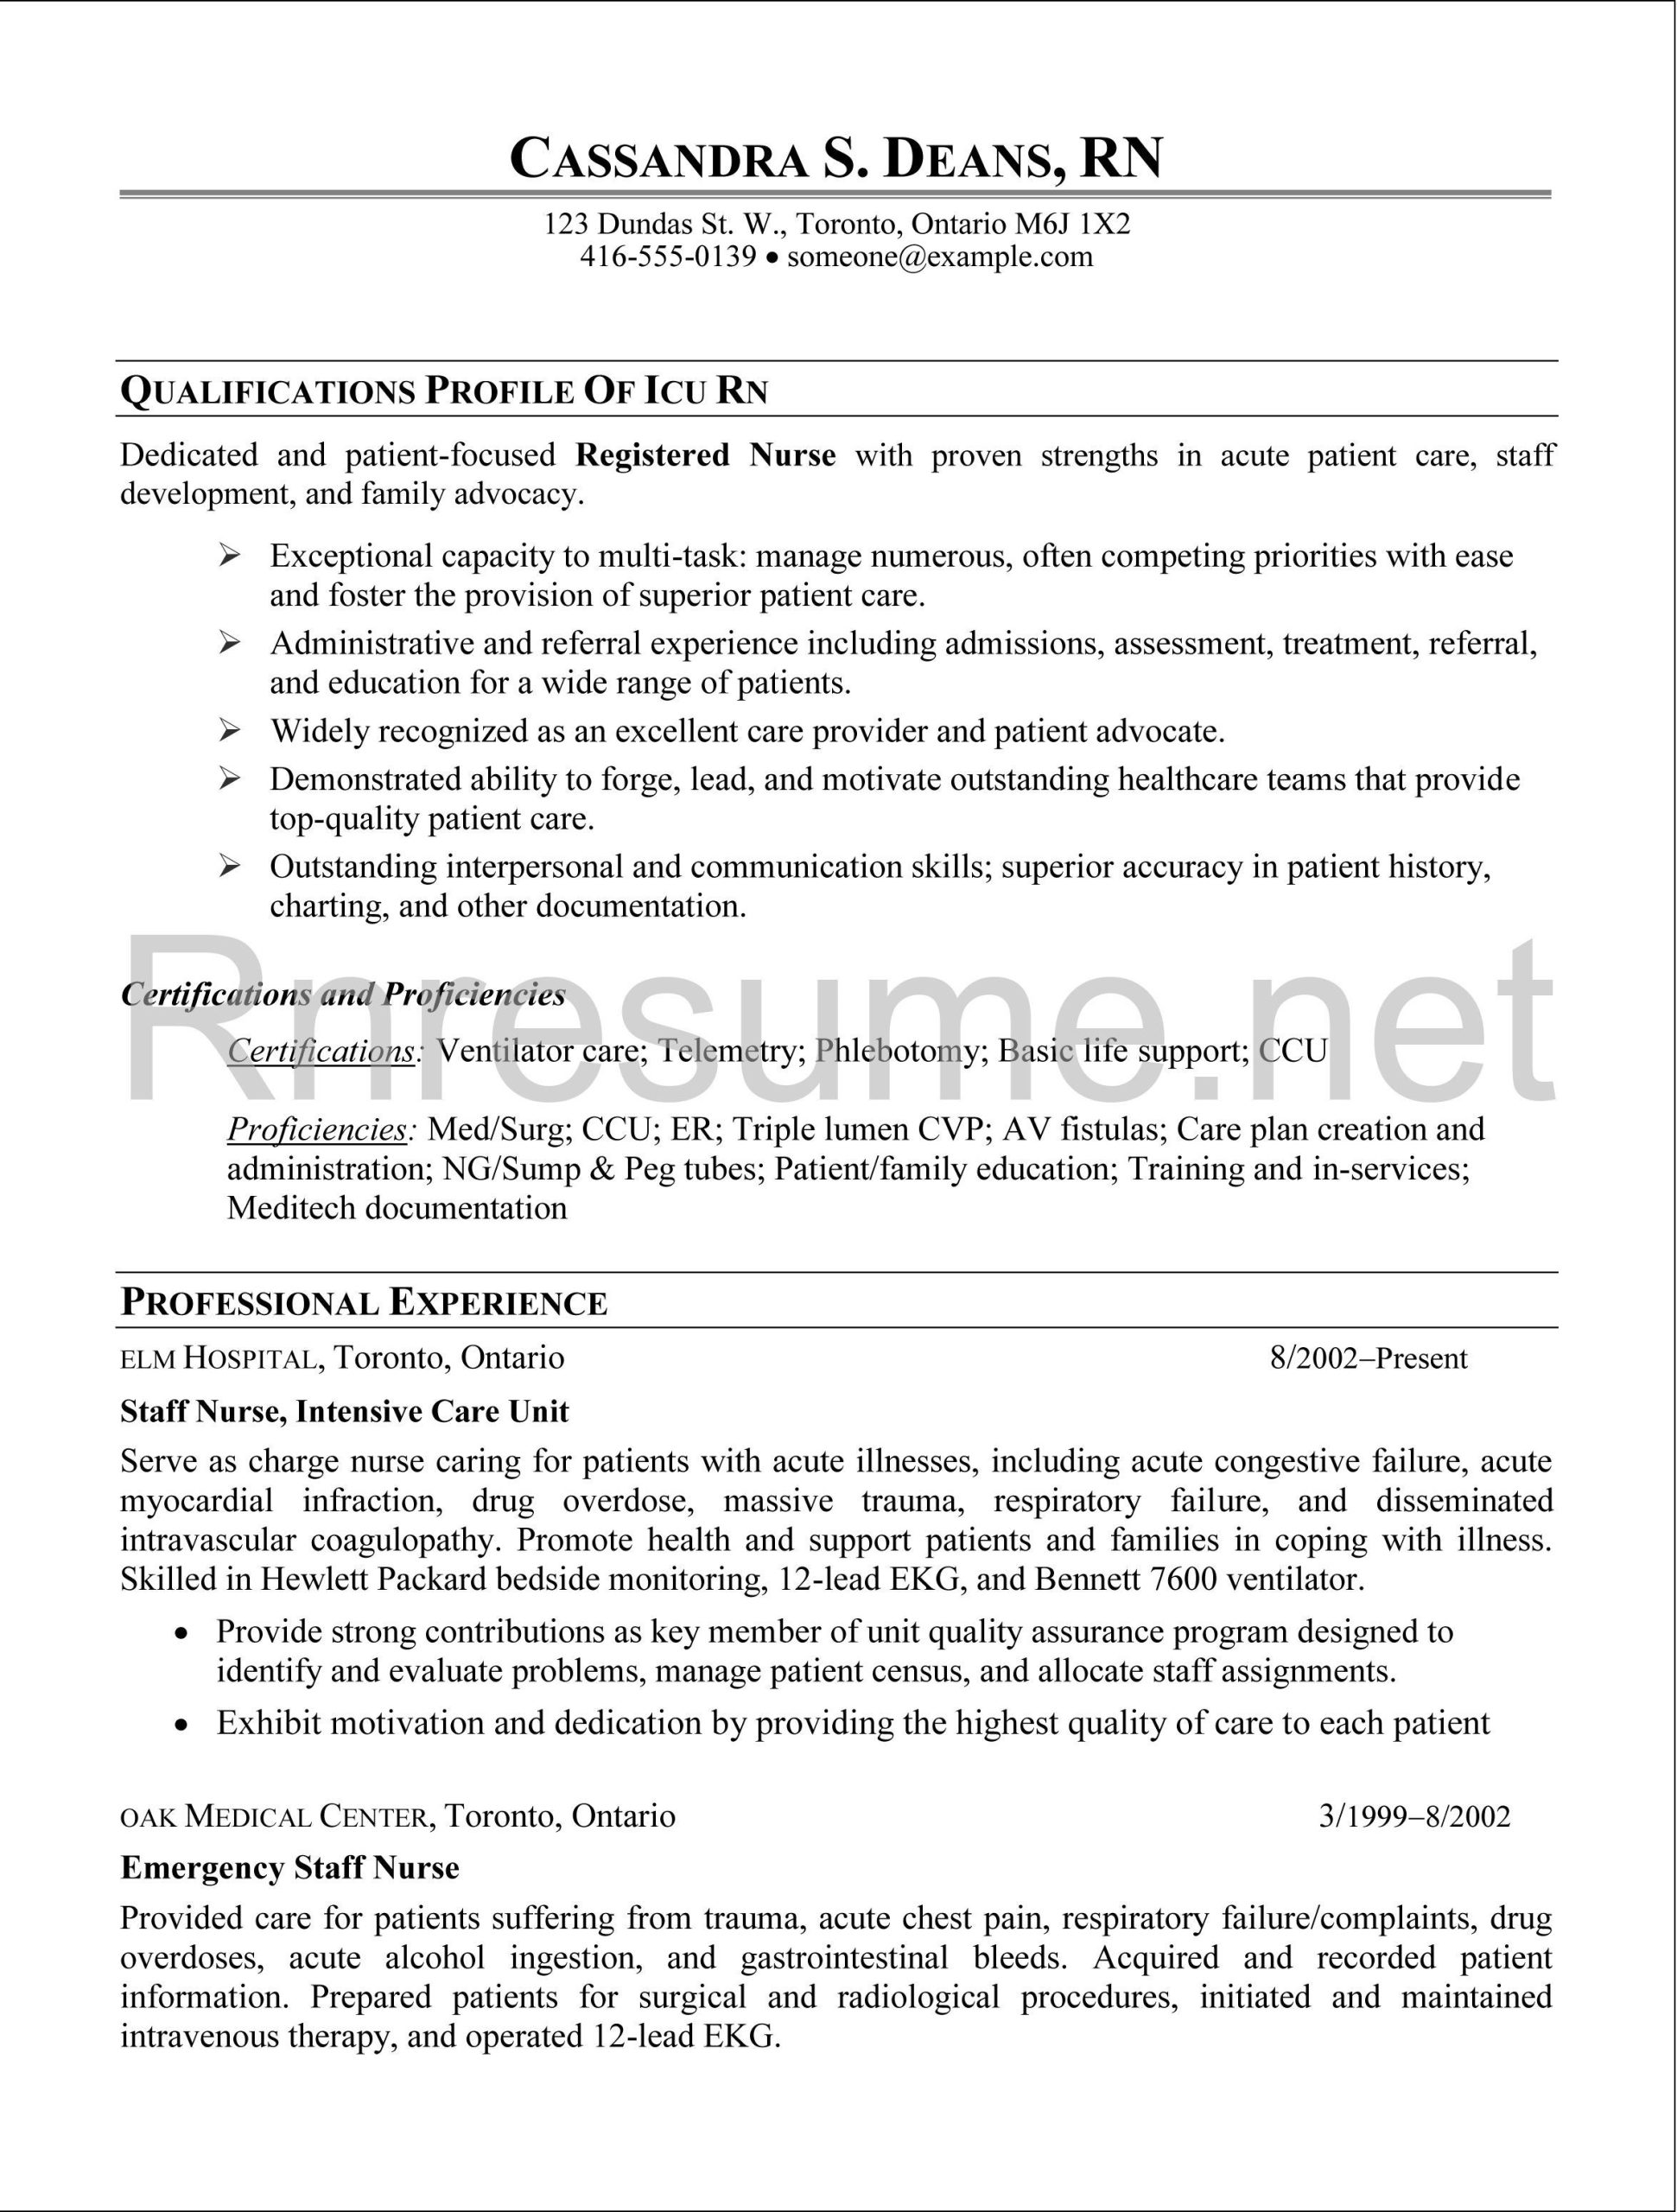 Sample Resume Of Icu Staff Nurse Icu Rn Resume Sample Http://www.rnresume.net/check-our-rn-resume …